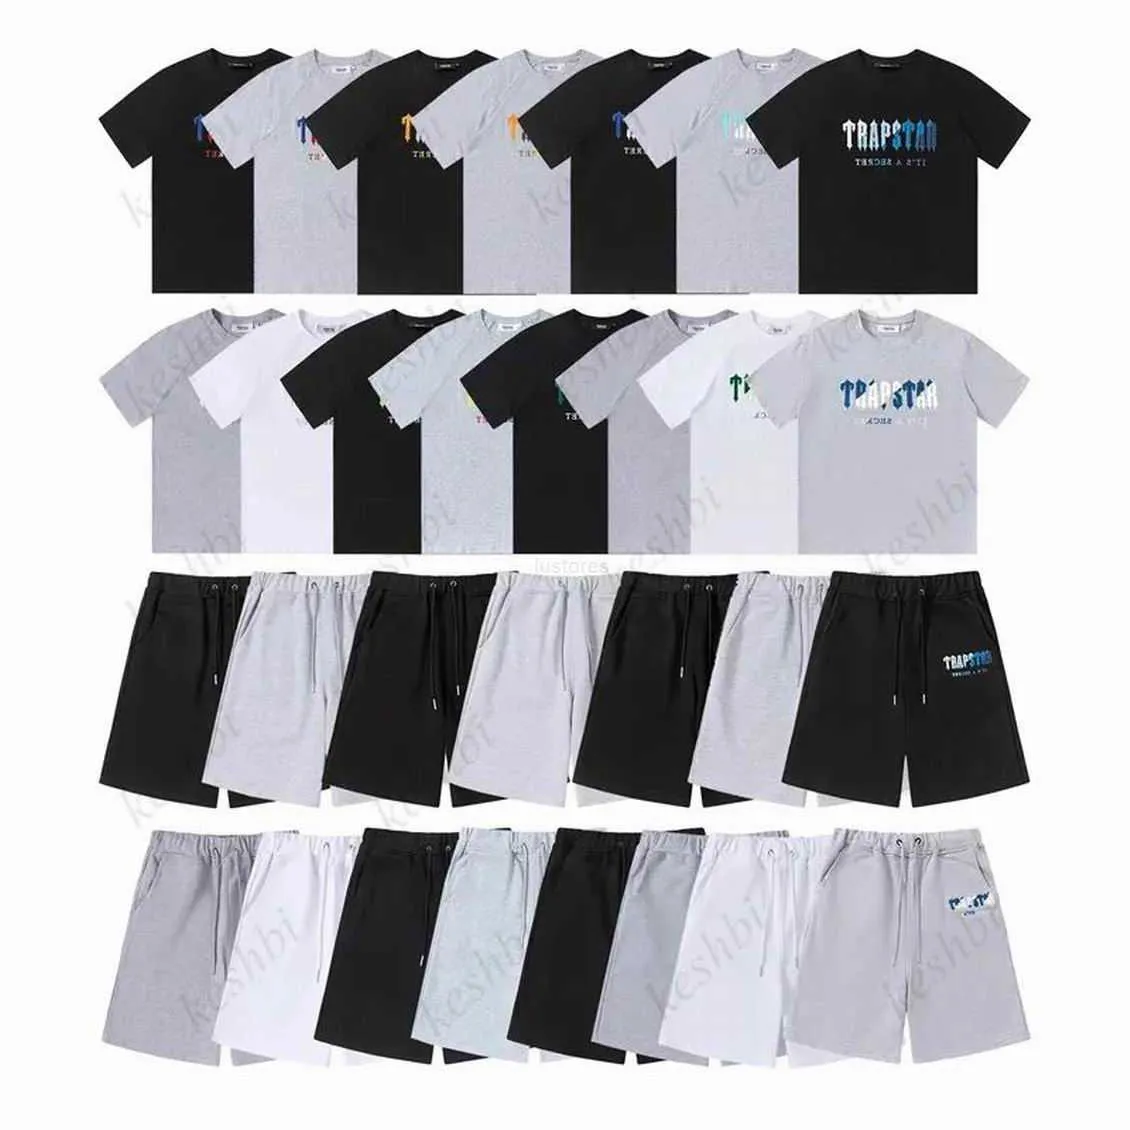 Trapstar Mens Suit Unique Embroidery Design Street Style Leading Fashion Trend Shirt Piece Sets Designer Rainbow Tshirts